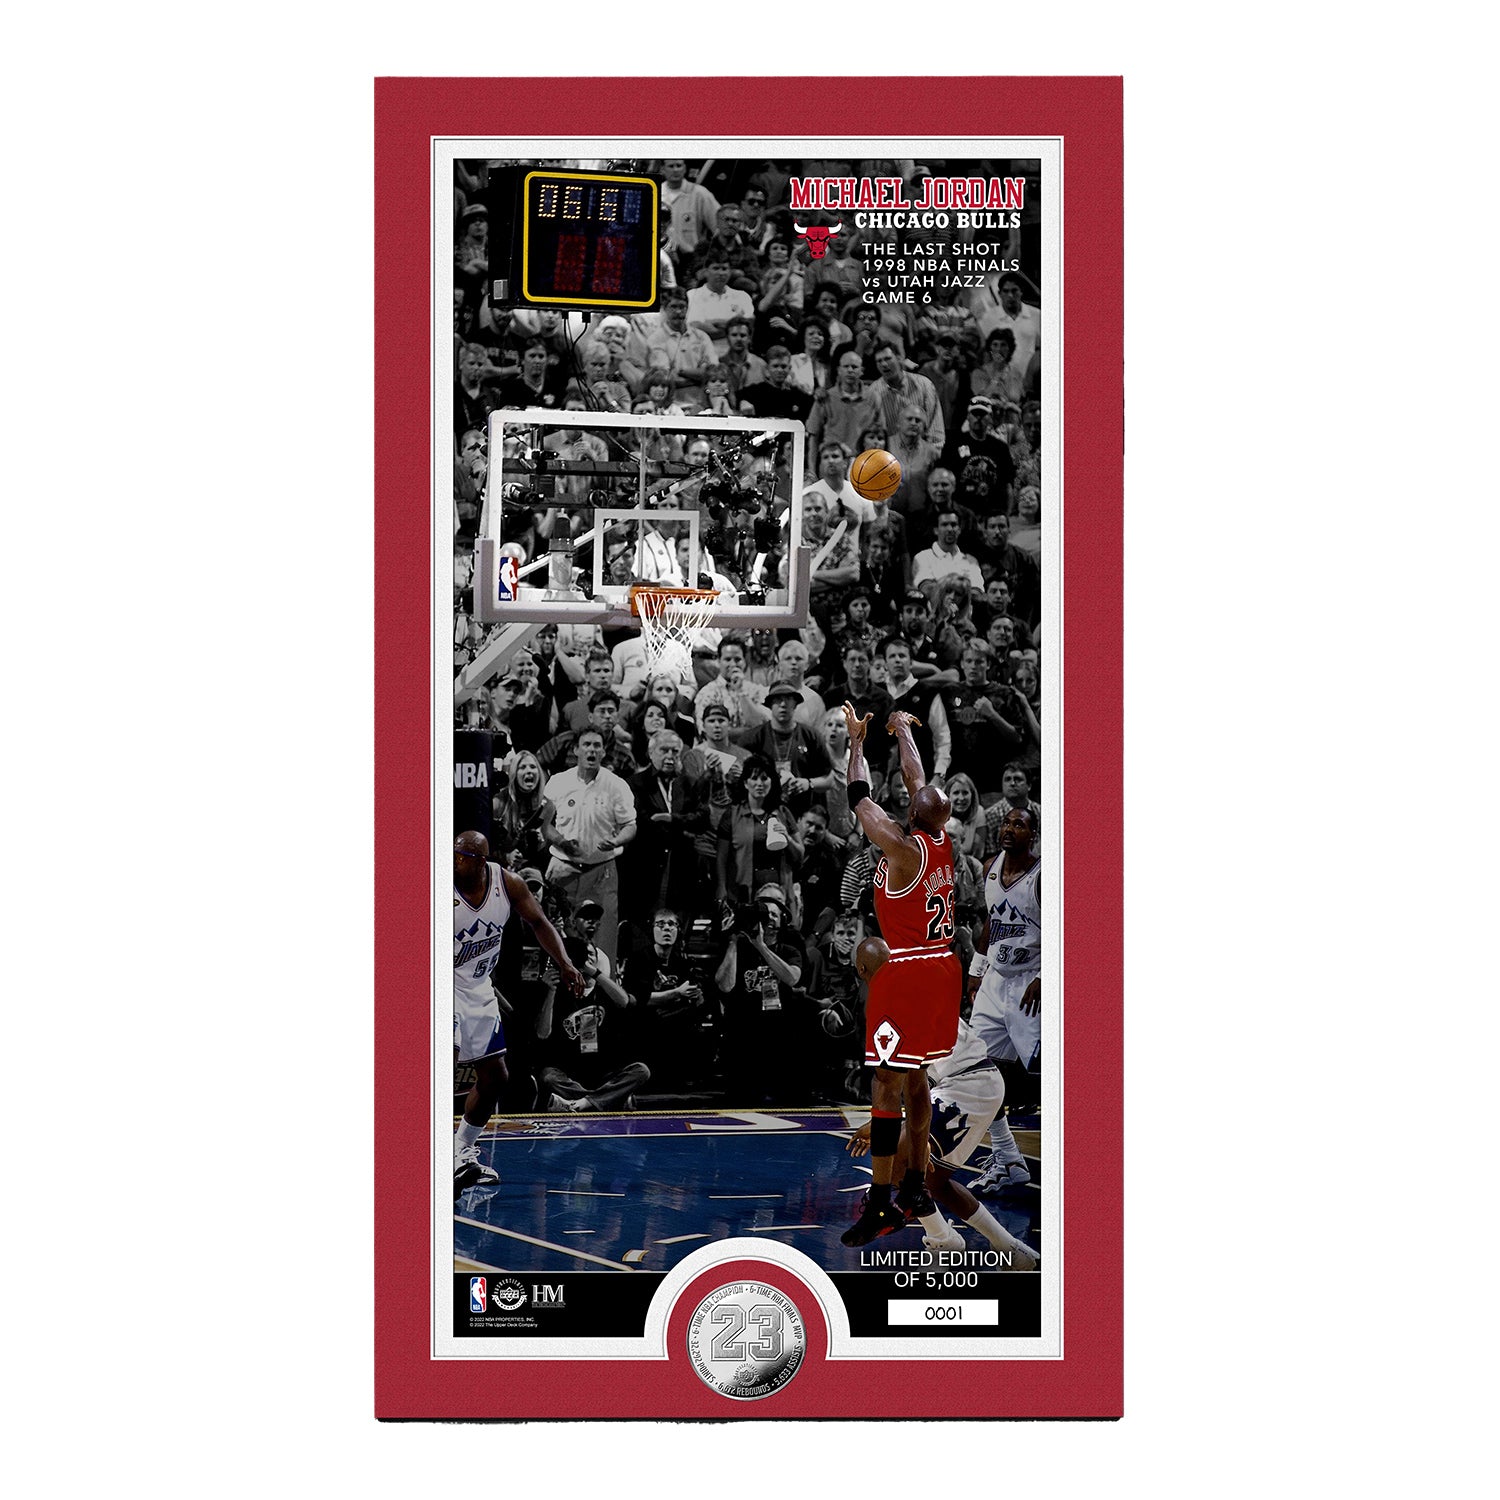 Chicago Bulls Michael Jordan The Last Shot 98 Finals Silver Coin Photo –  Official Chicago Bulls Store